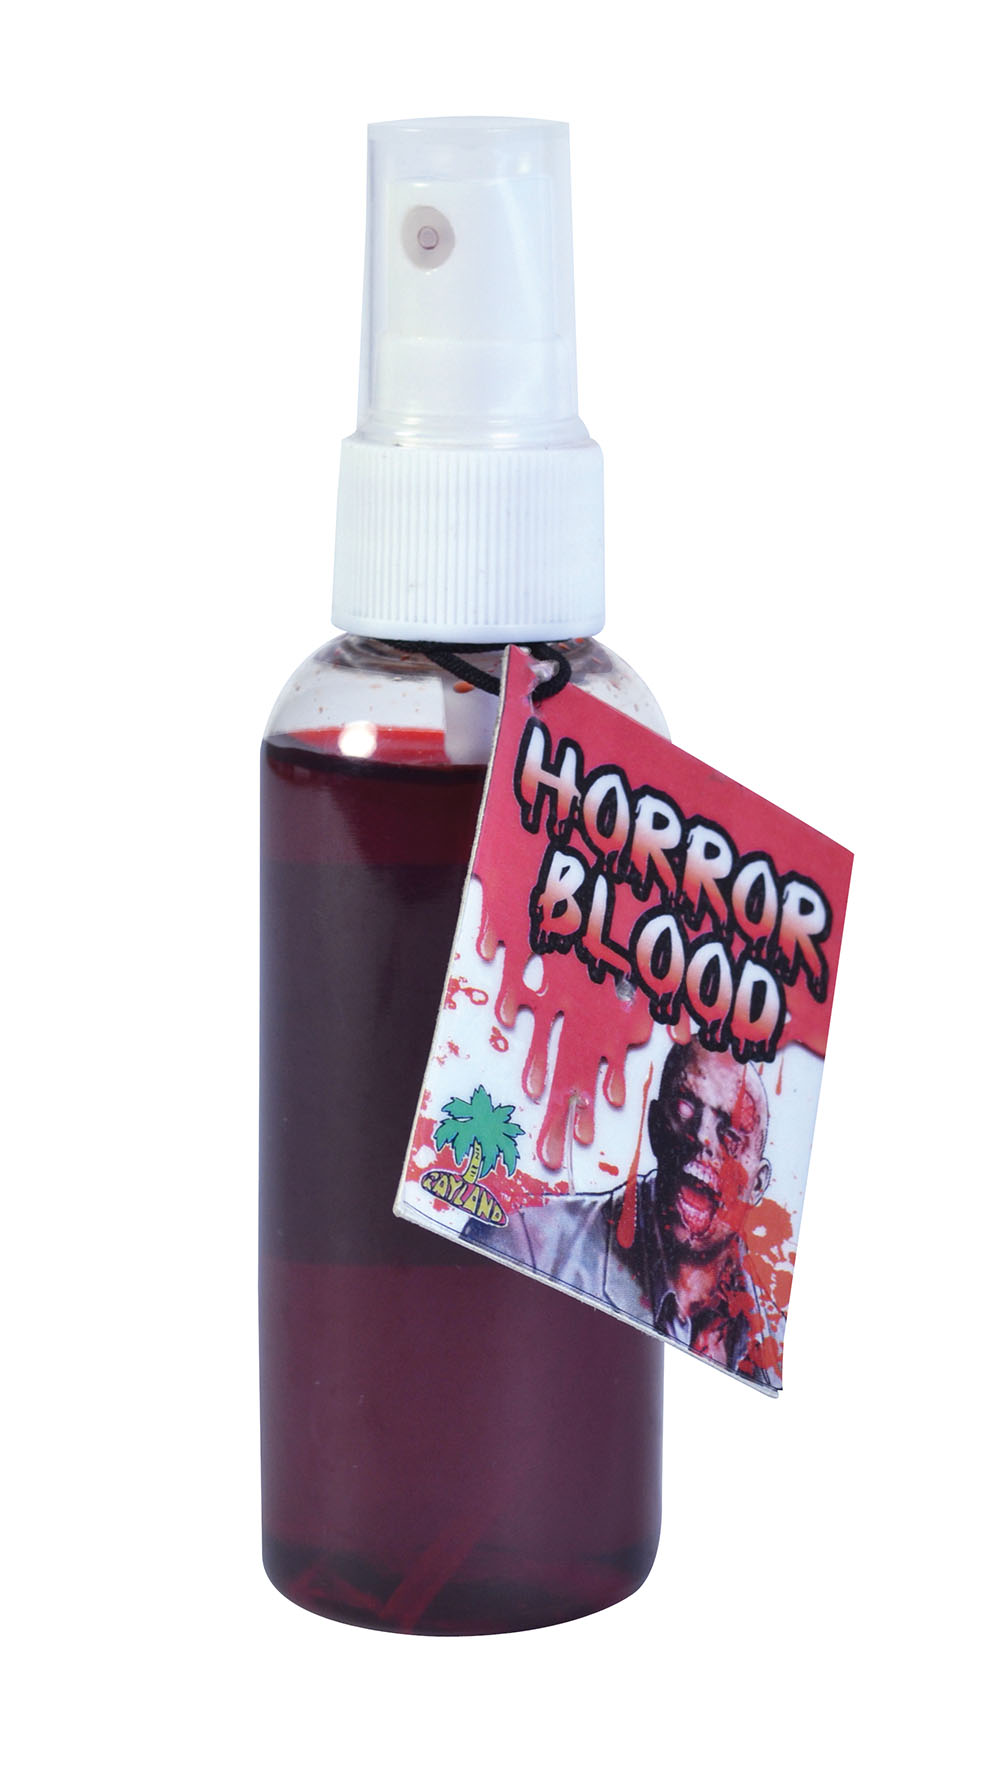 Blood Spray (2oz)